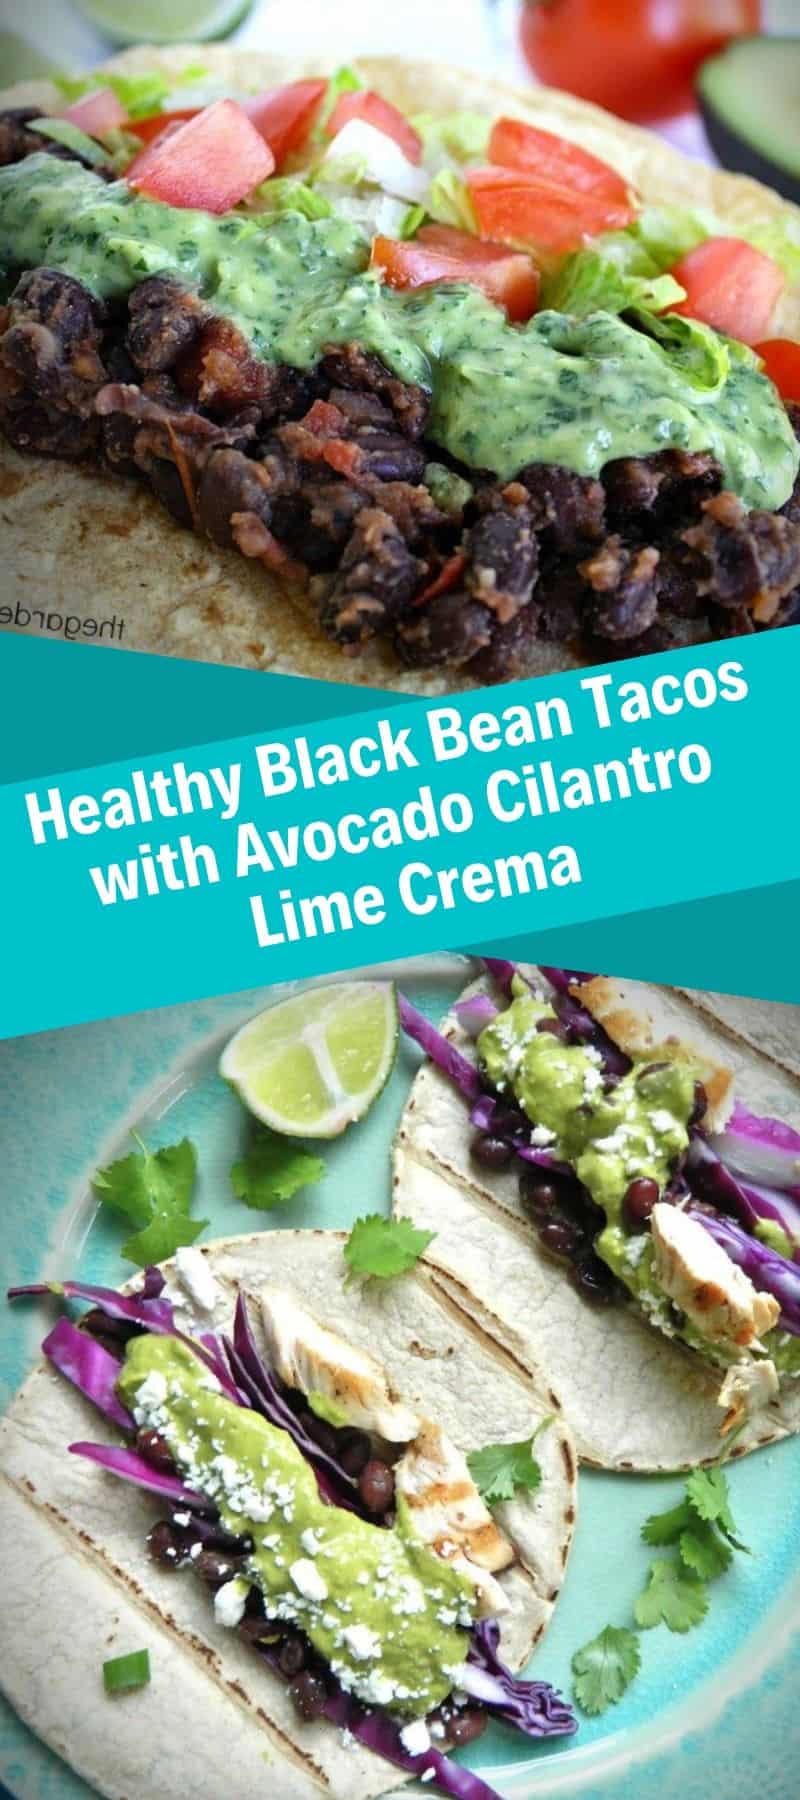 Healthy Black Bean Tacos with Avocado Cilantro Lime Crema